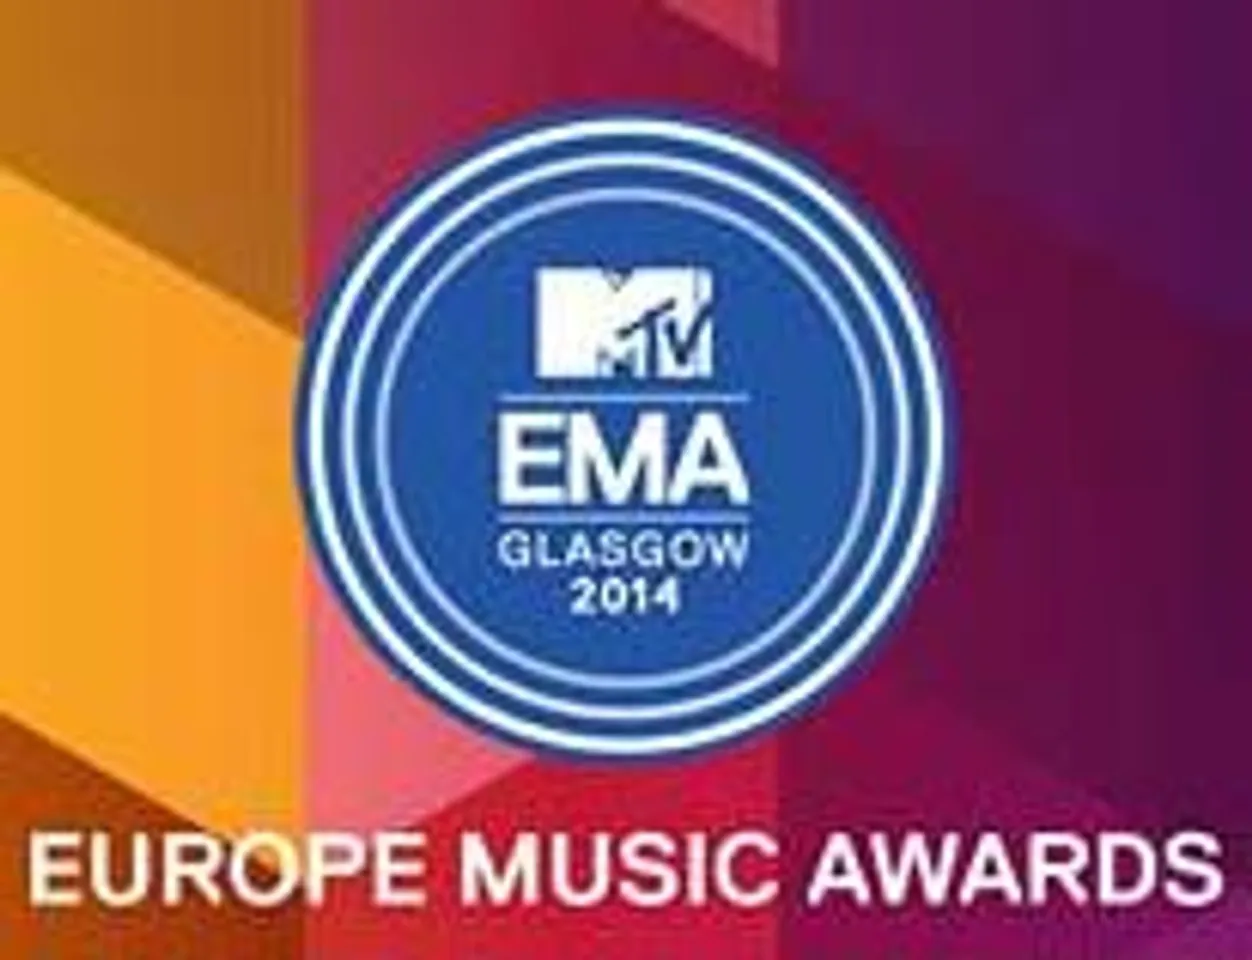 Europe Music Awards 2014 Live on Vh1